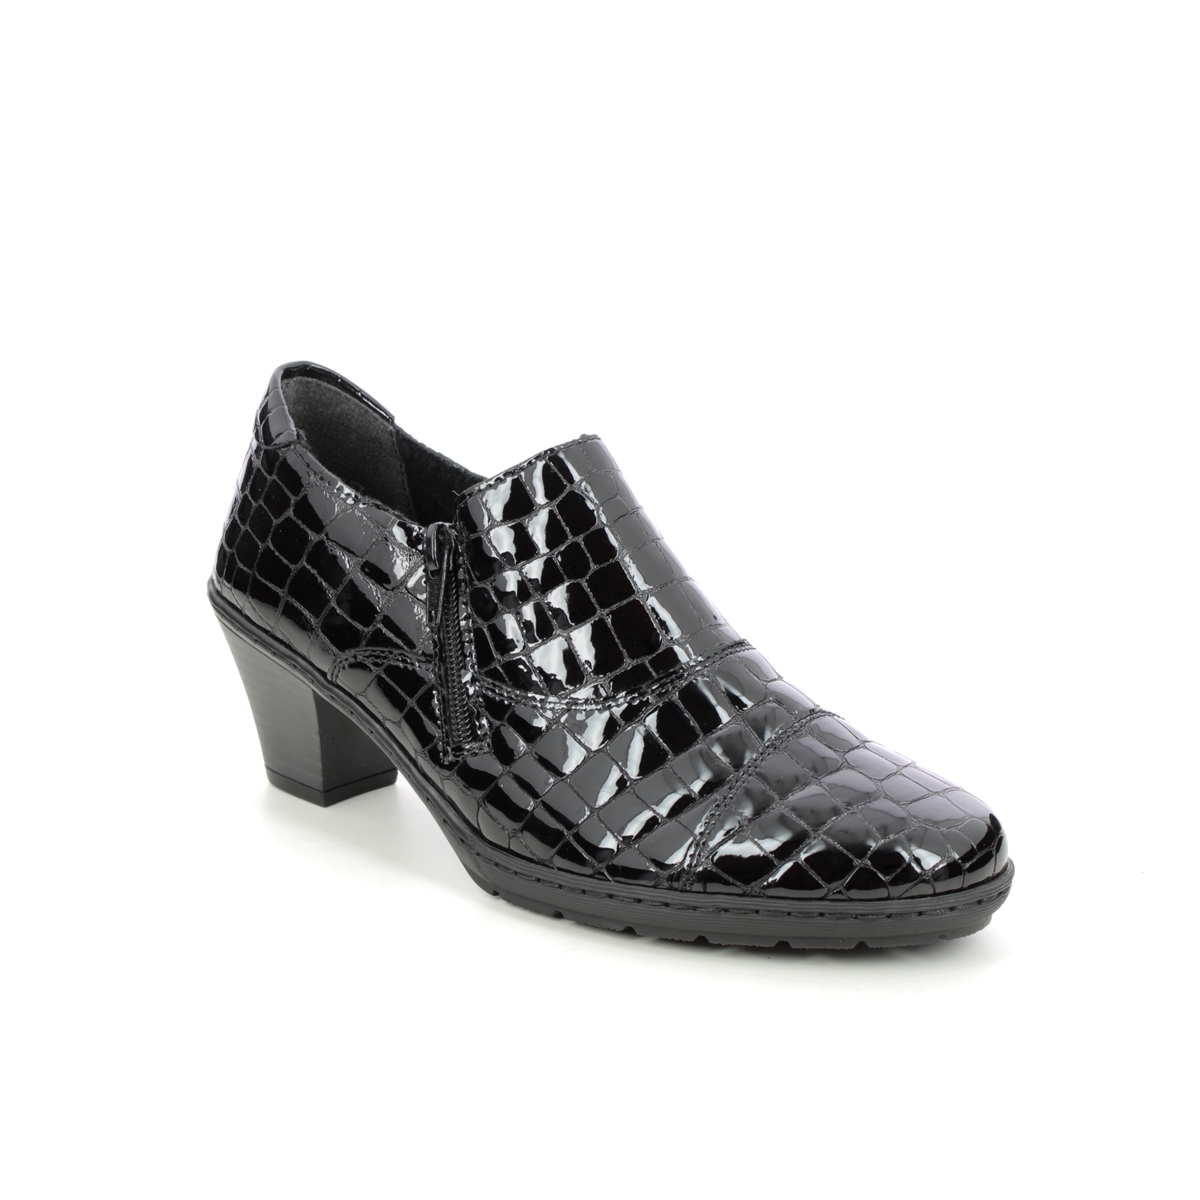 Rieker 57173-03 Black croc Womens shoe-boots in a Plain Leather in Size 41